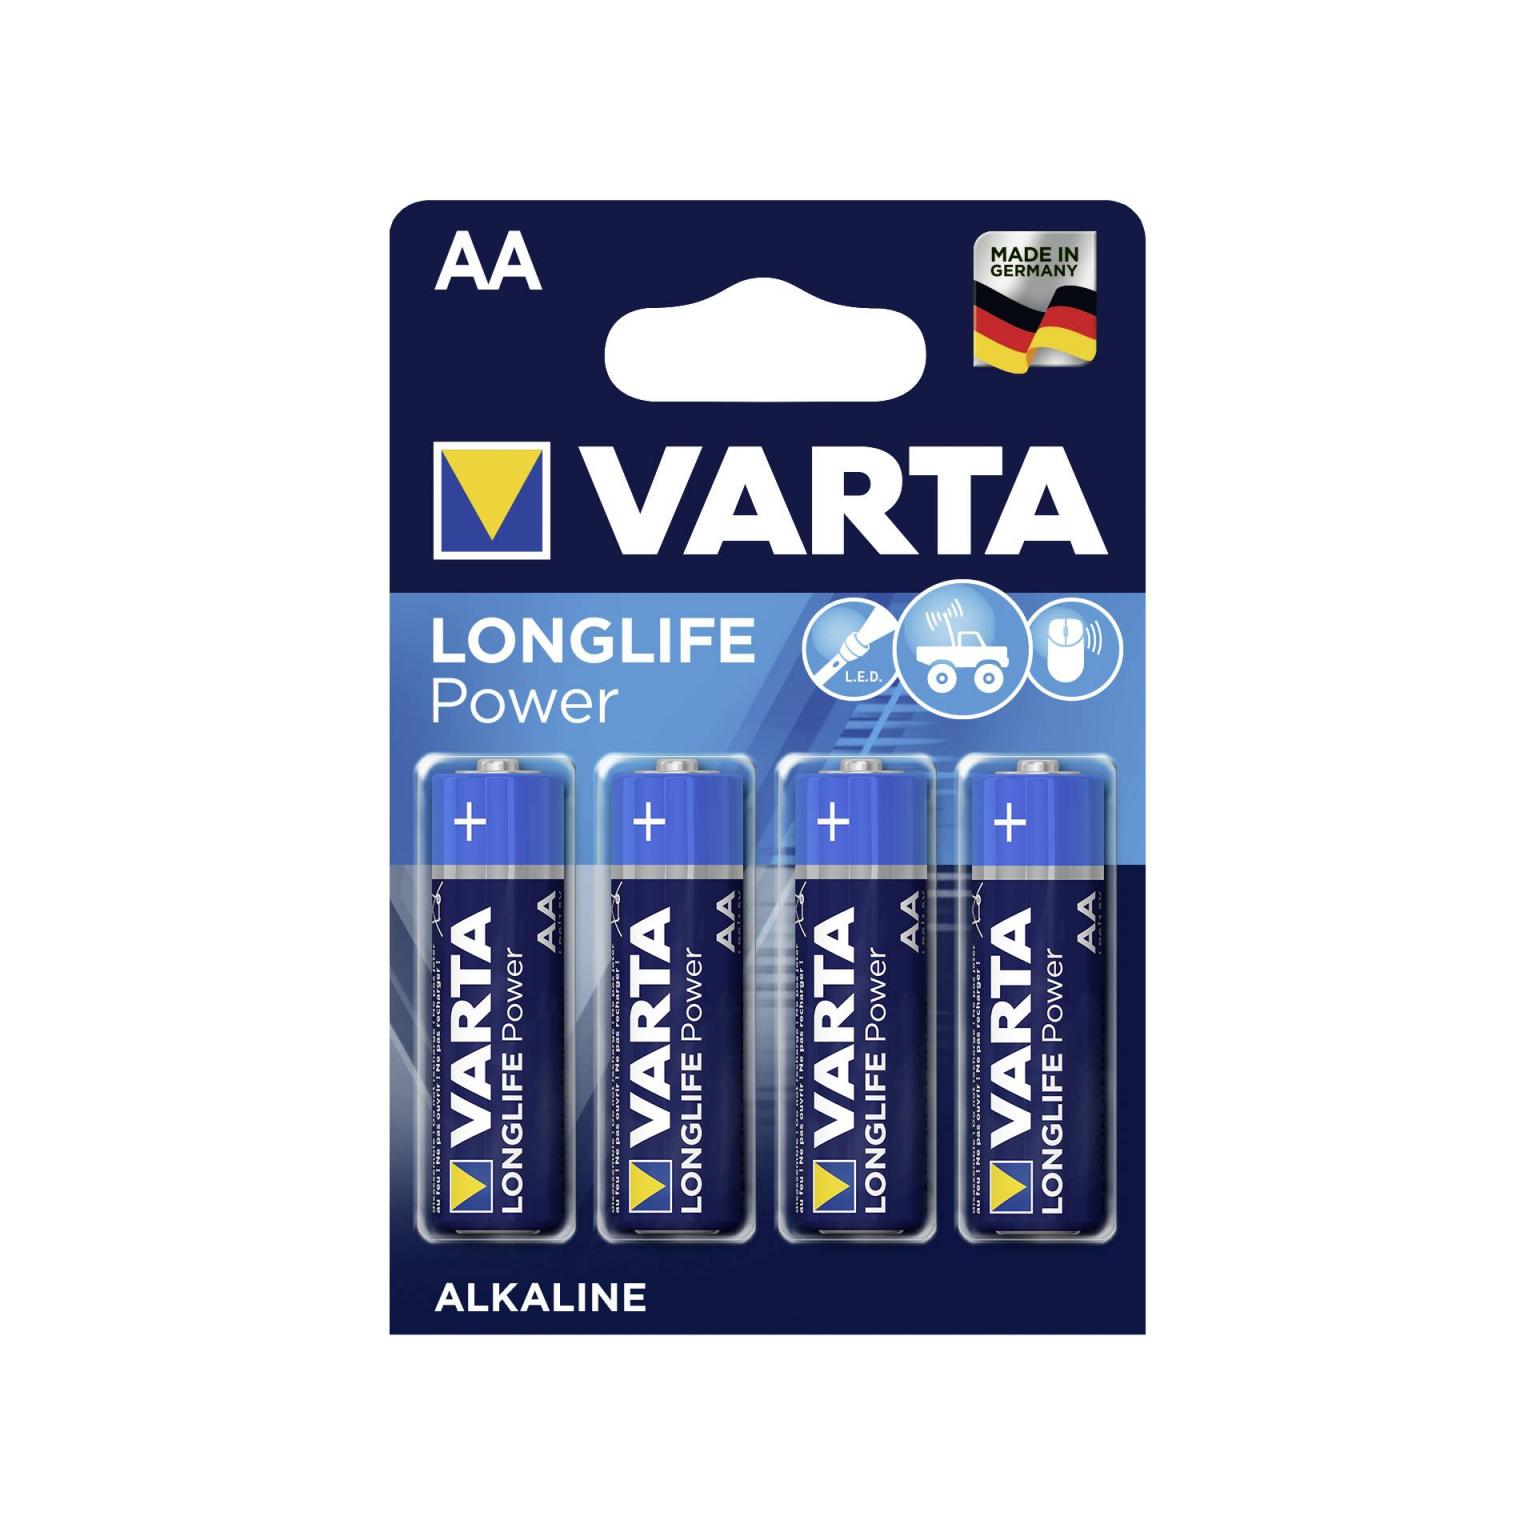 20x4 Varta High Energy Mignon AA LR 6 VPE binnenverpakking - Varta